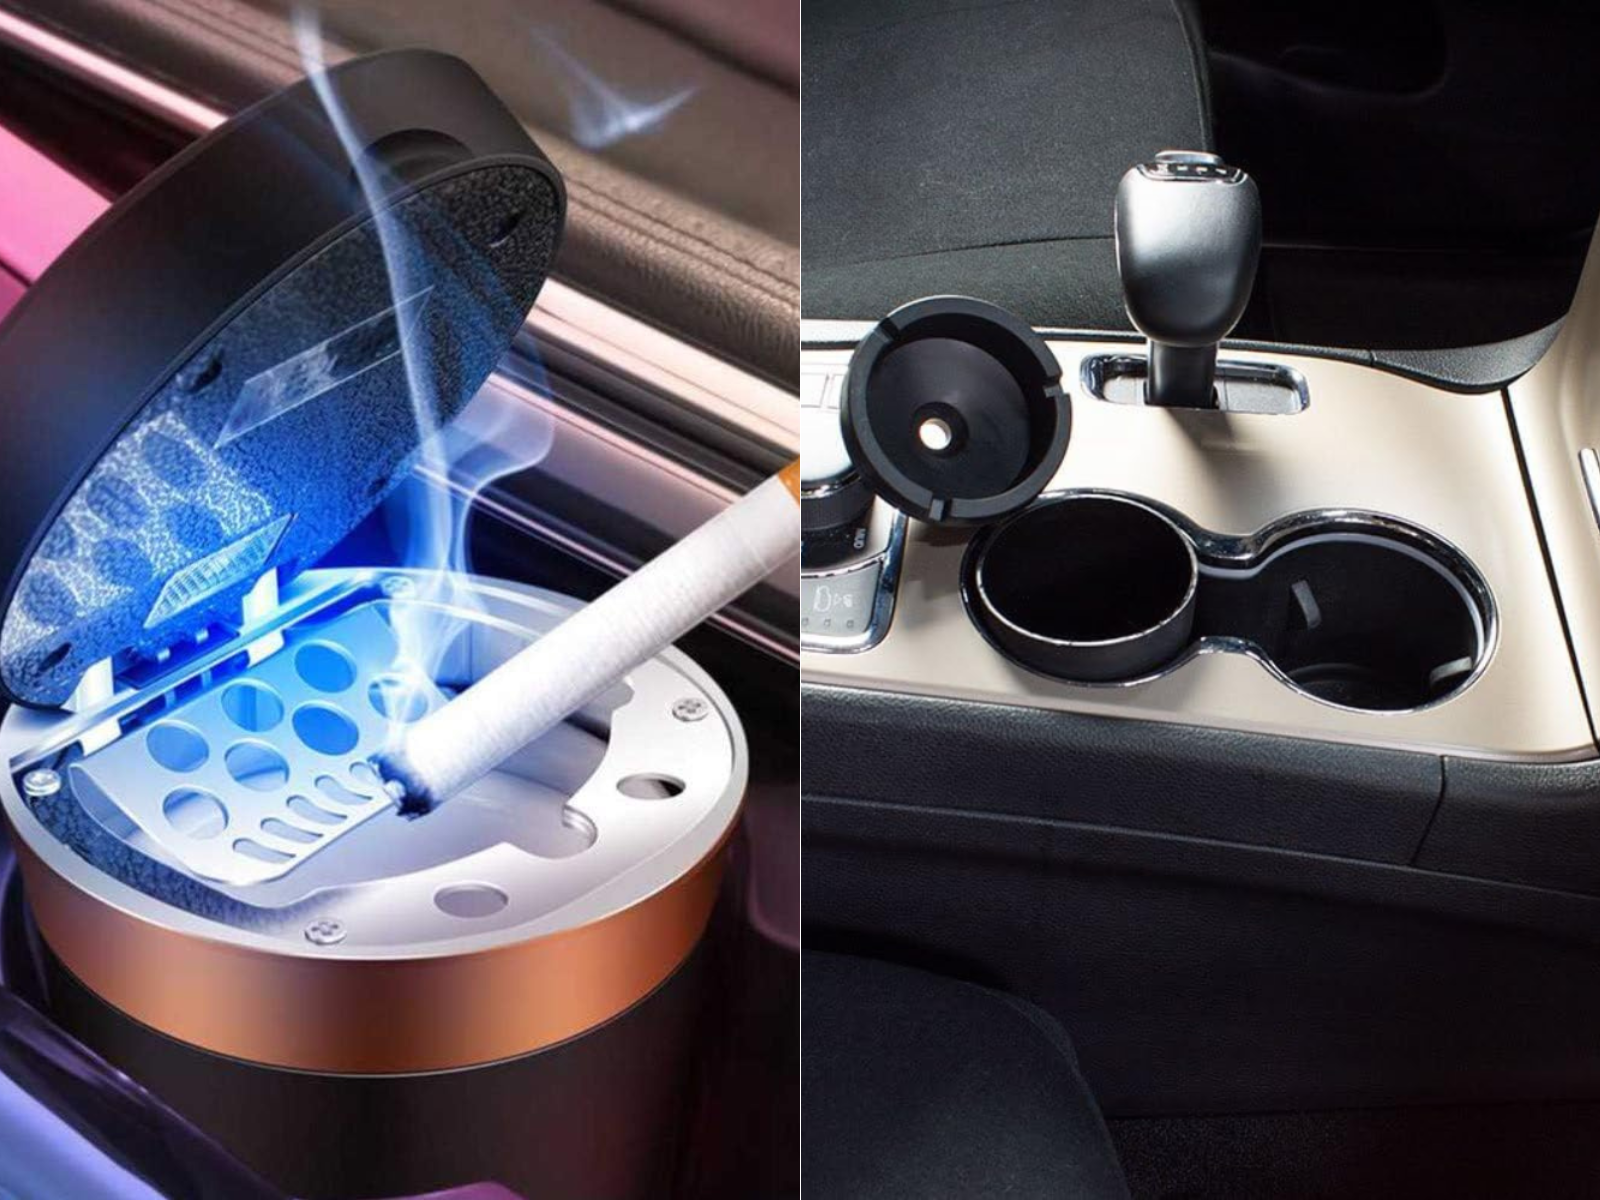 A blue LED lighted ashtray and a smokeless car ashtray